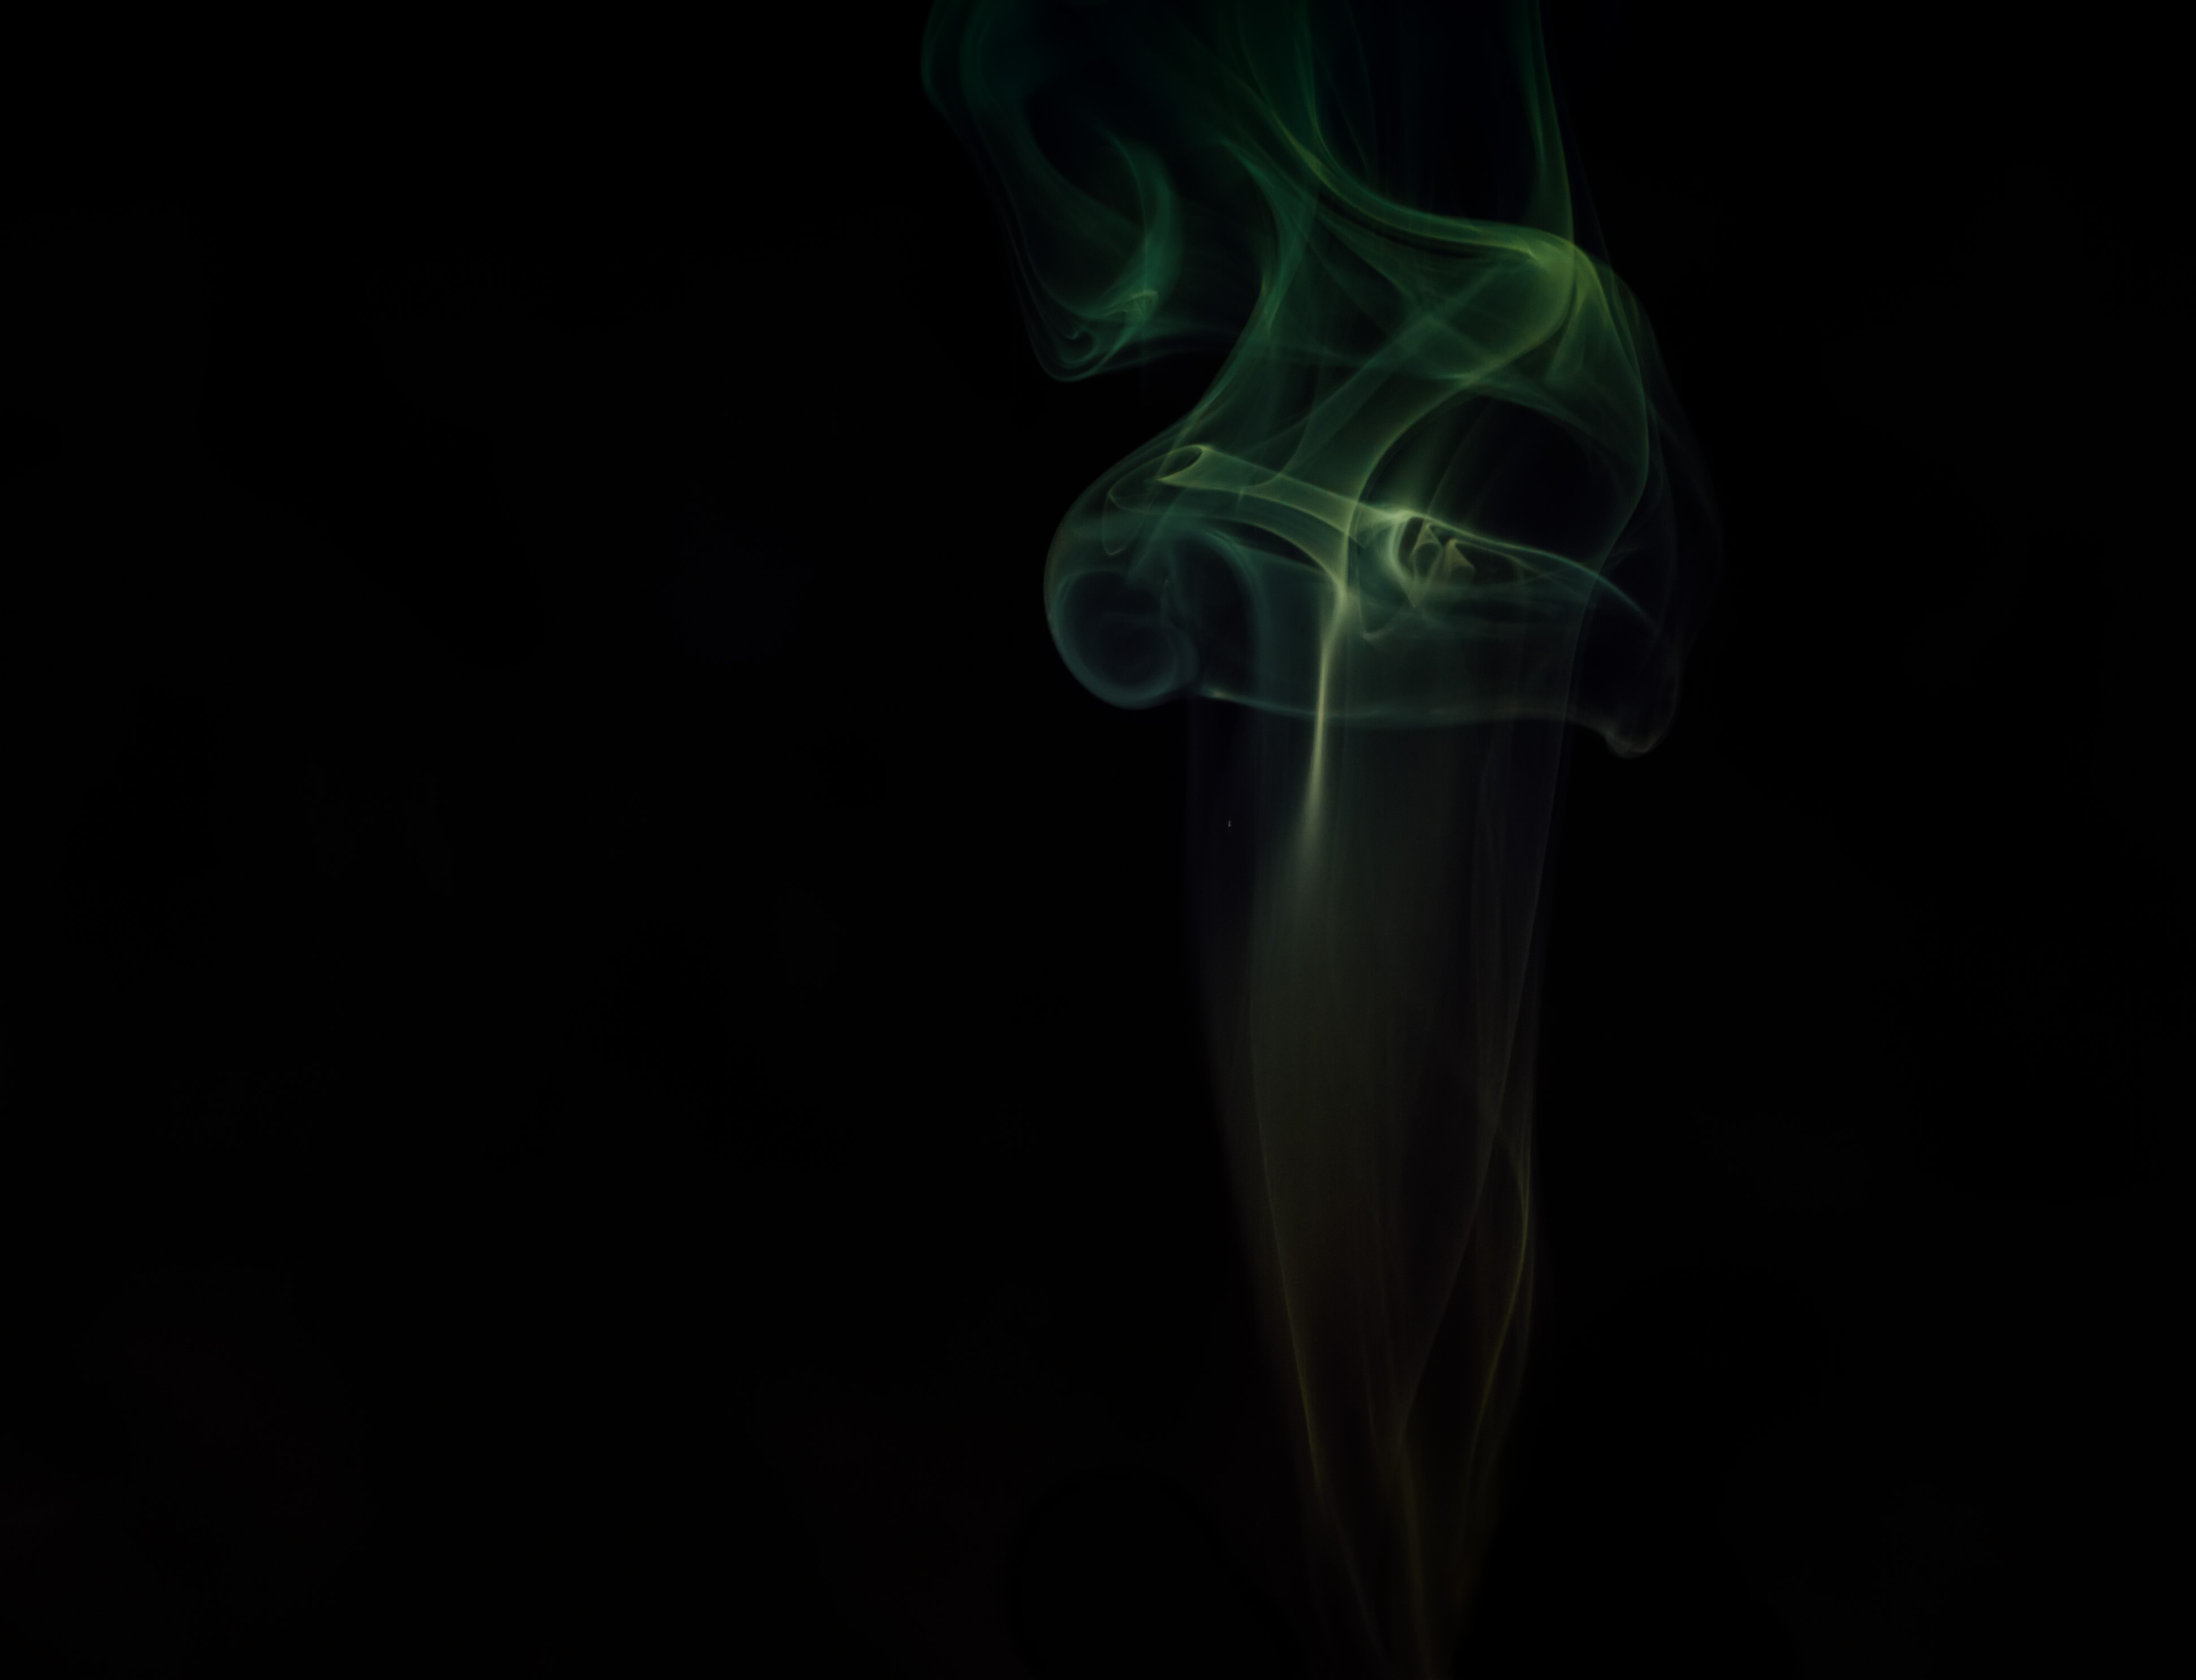 abstract, smoke, dark background, shroud, clot